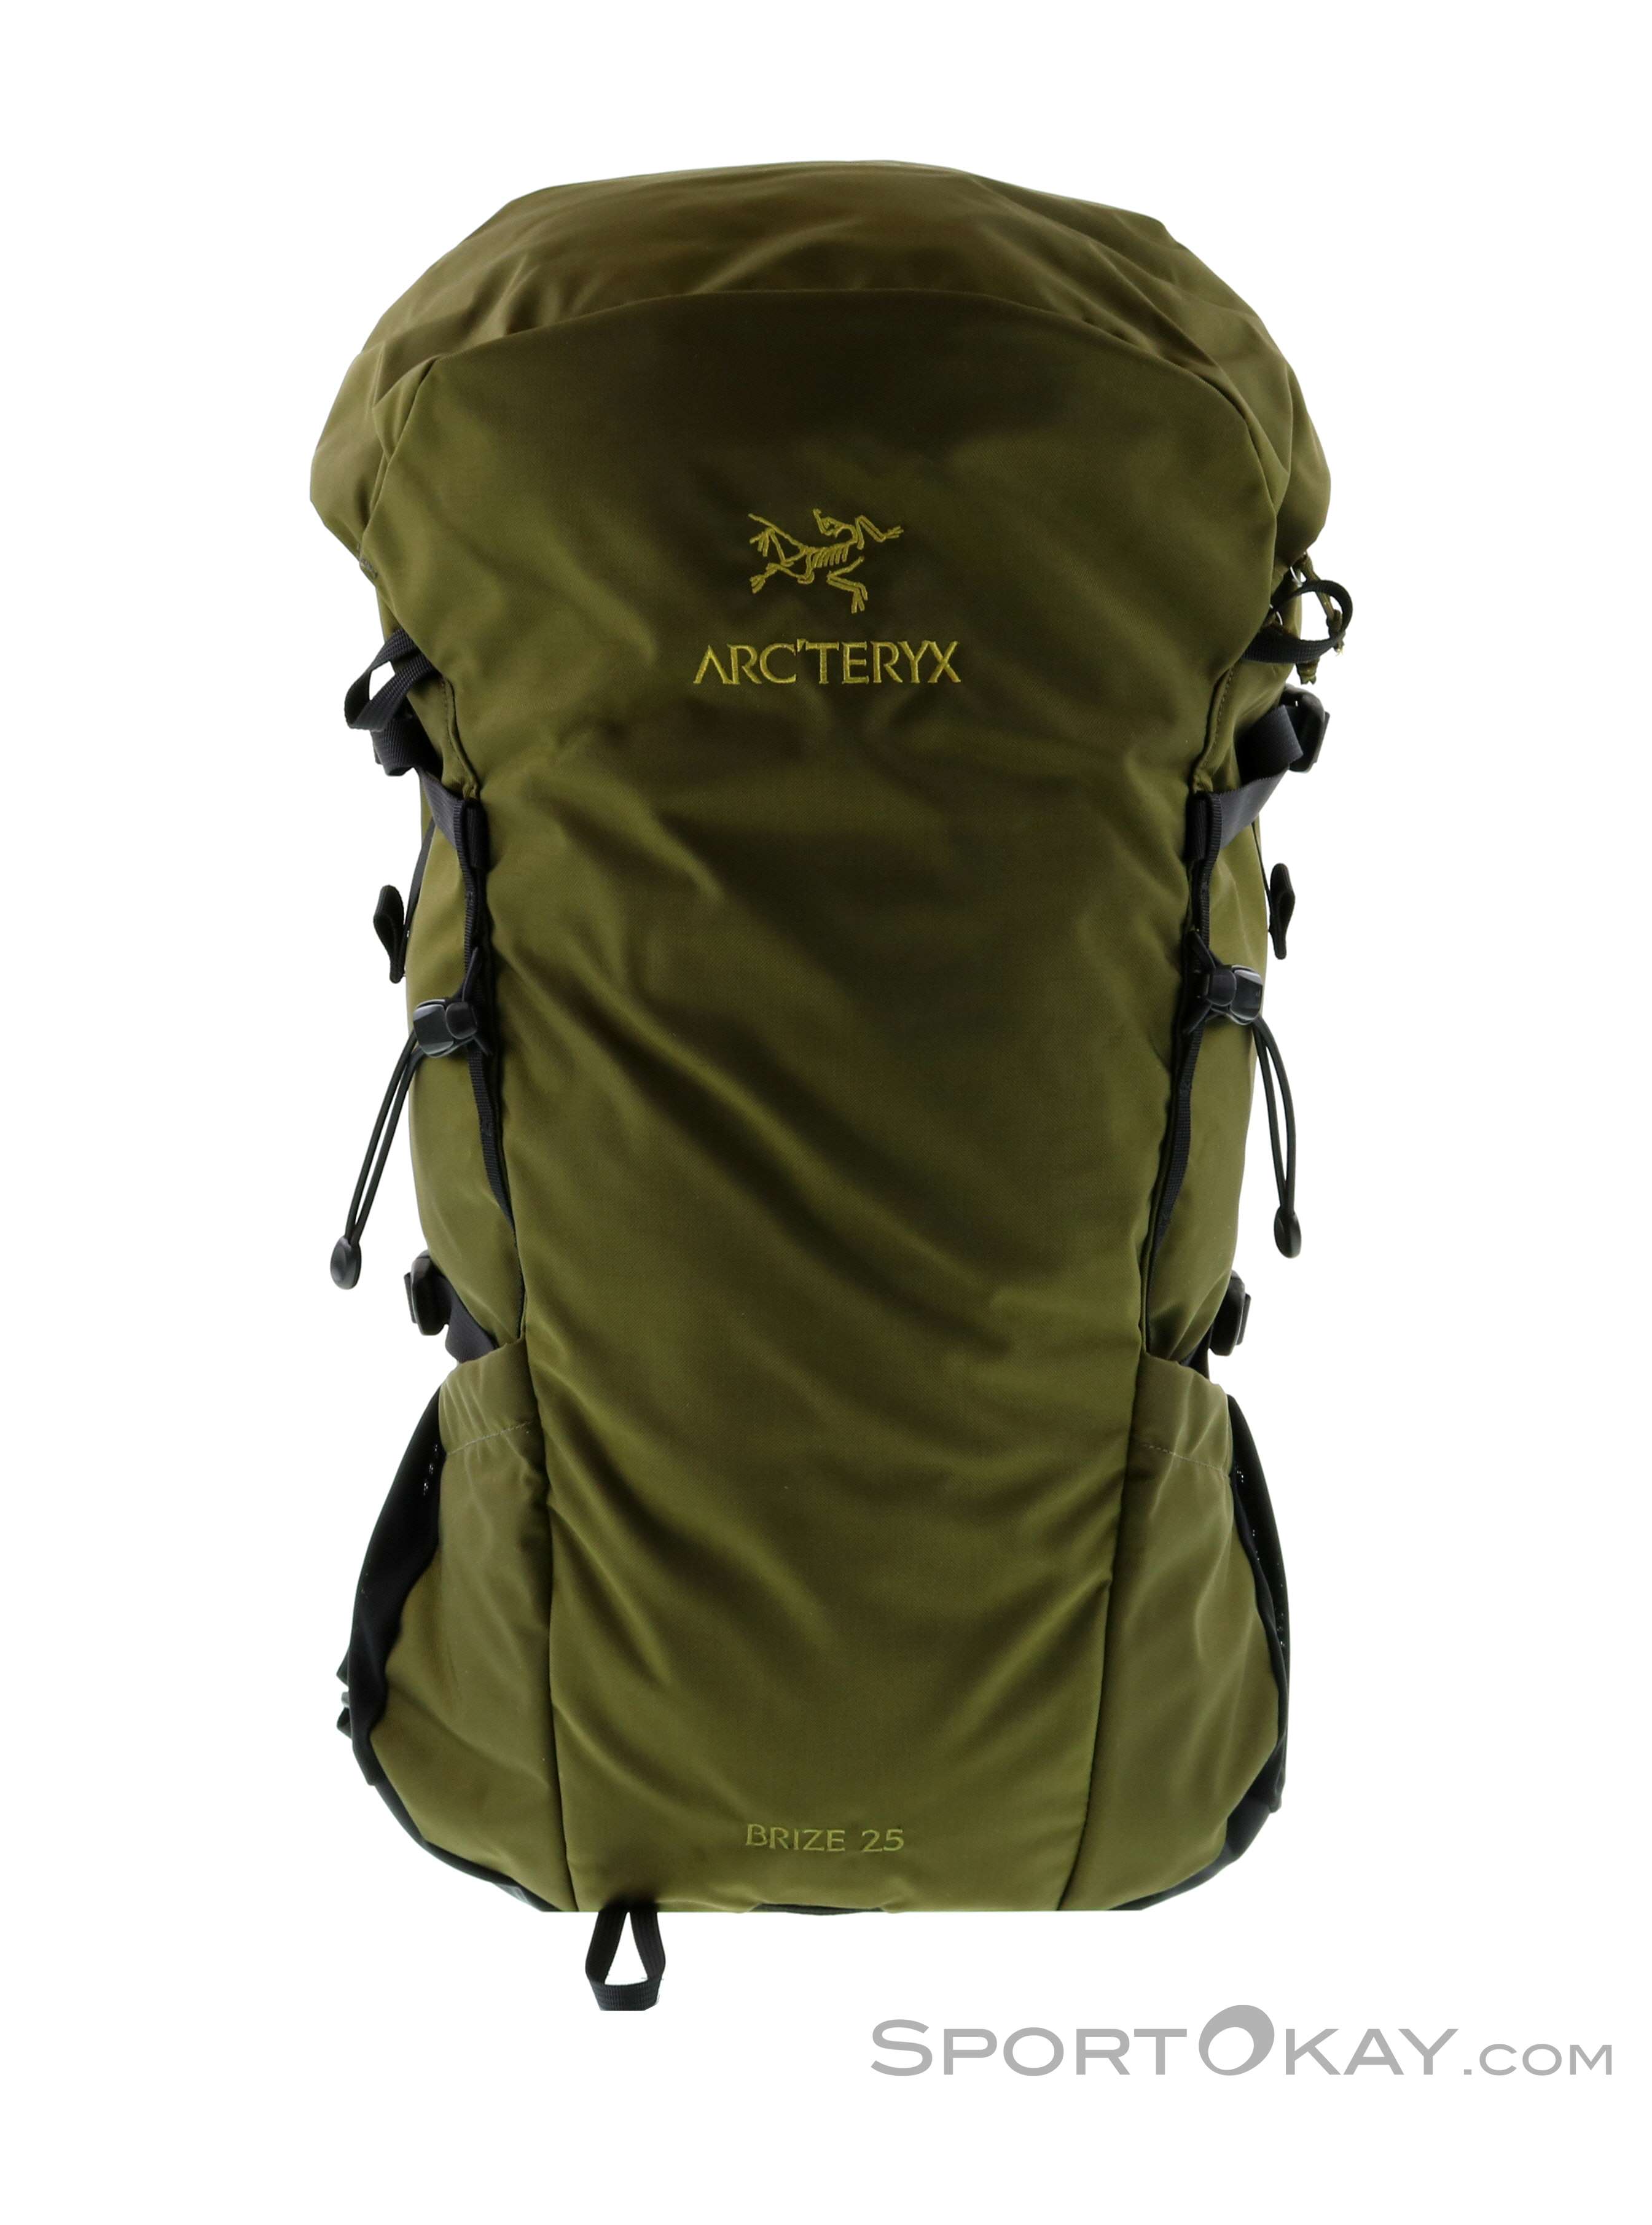 Arcteryx Brize 25l Backpack - Climbing Backpack - Climbing